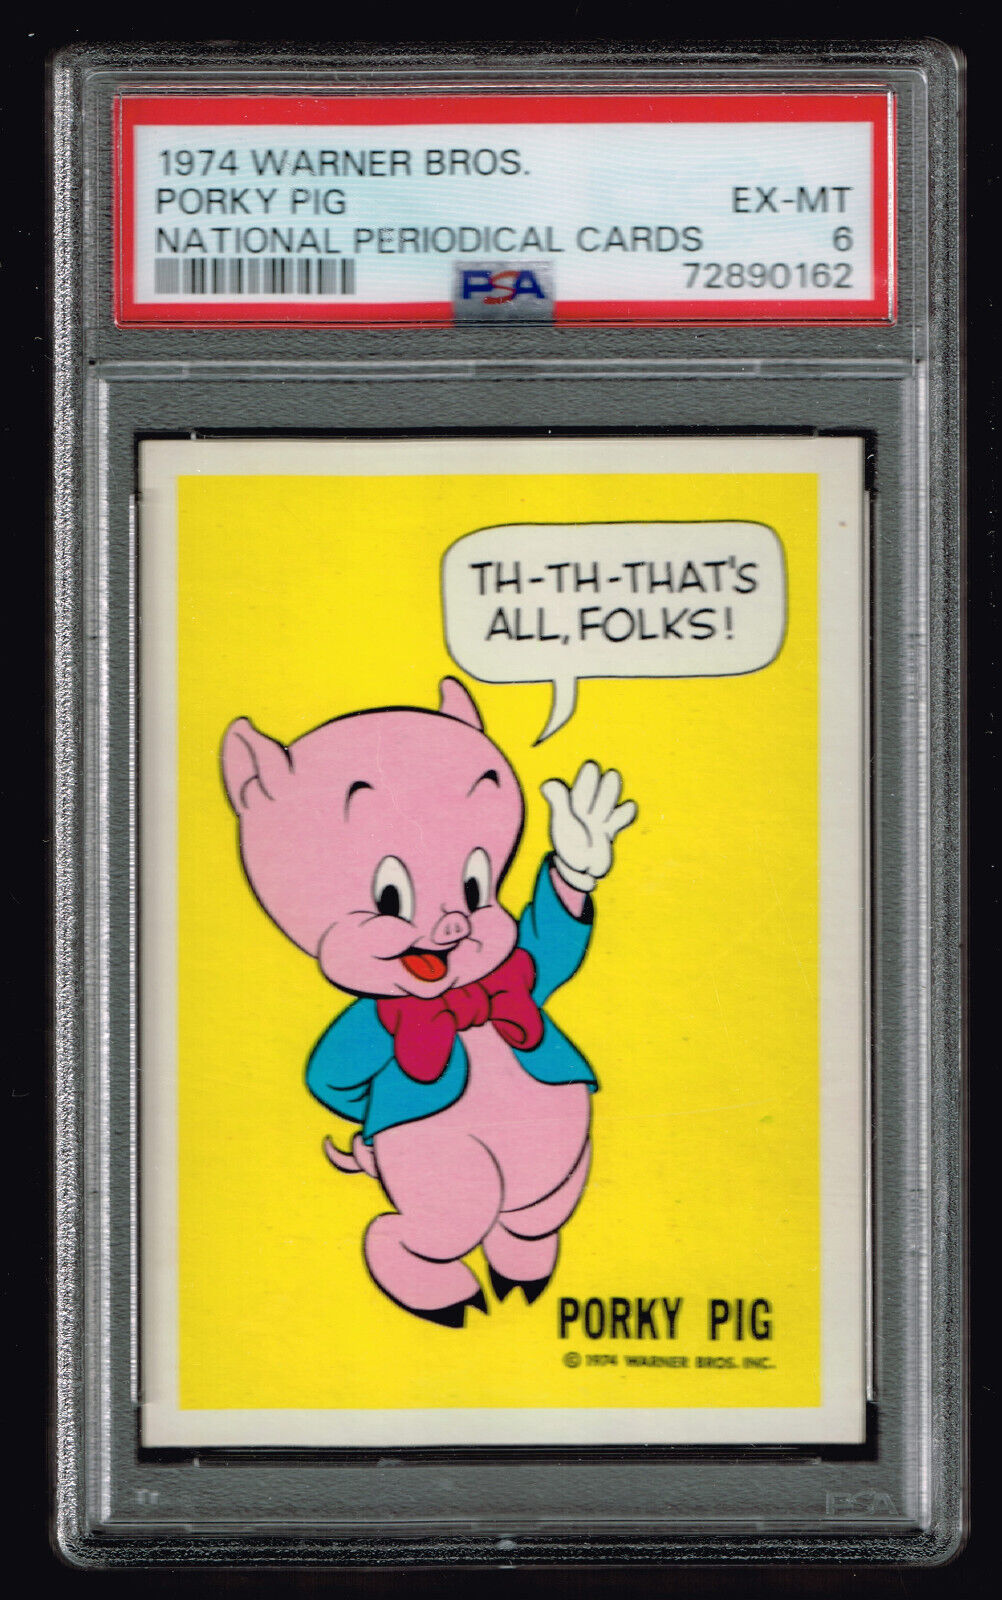 1974 PSA 6 National Periodical Wonder Bread Warner Brothers Porky Pig